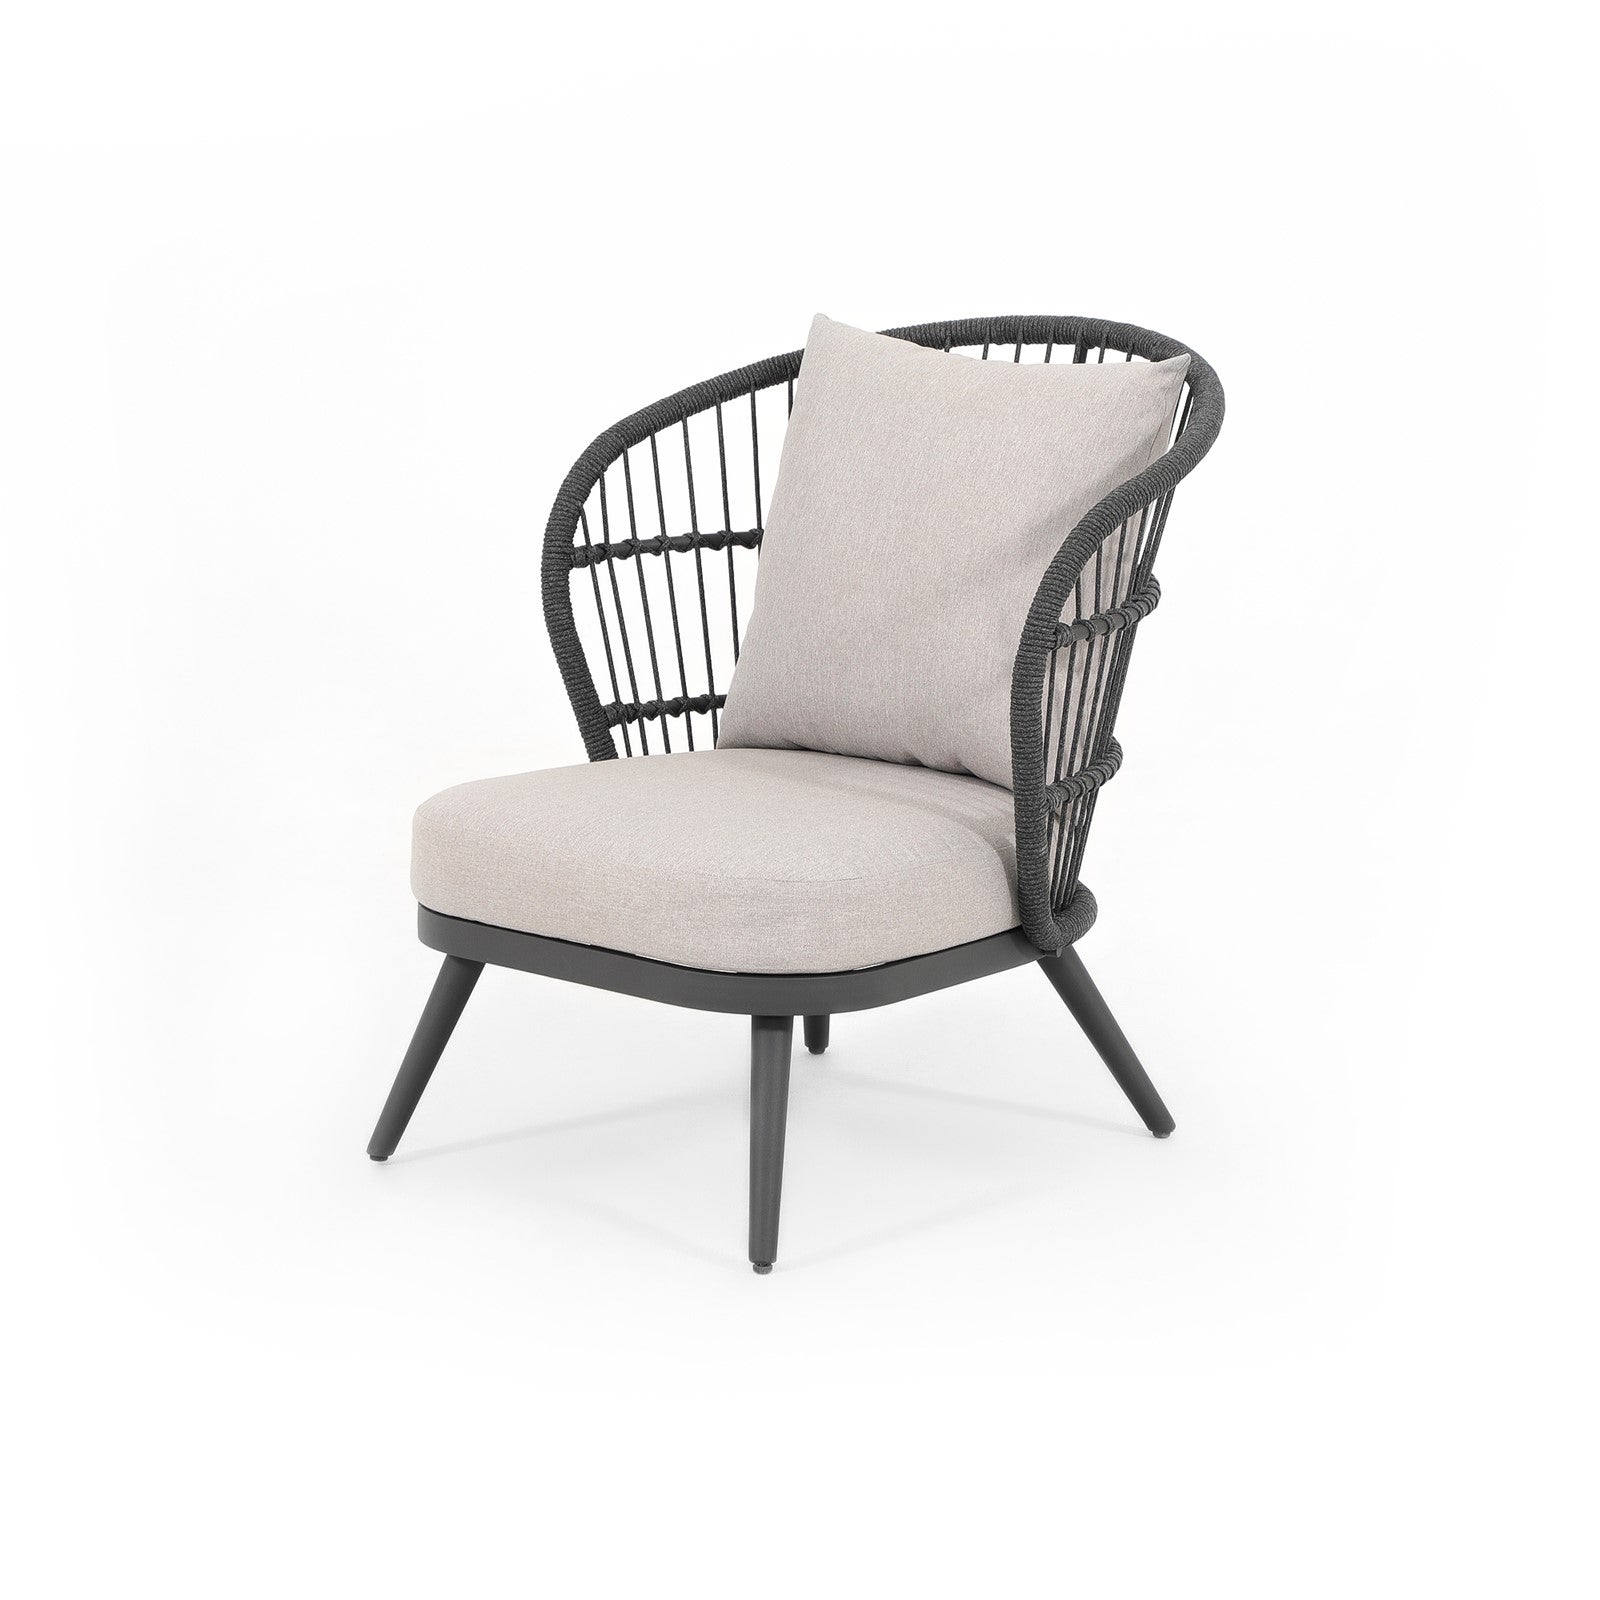 Outdoor Chairs - Jardina Contemporary & Modern Outdoor Furniture